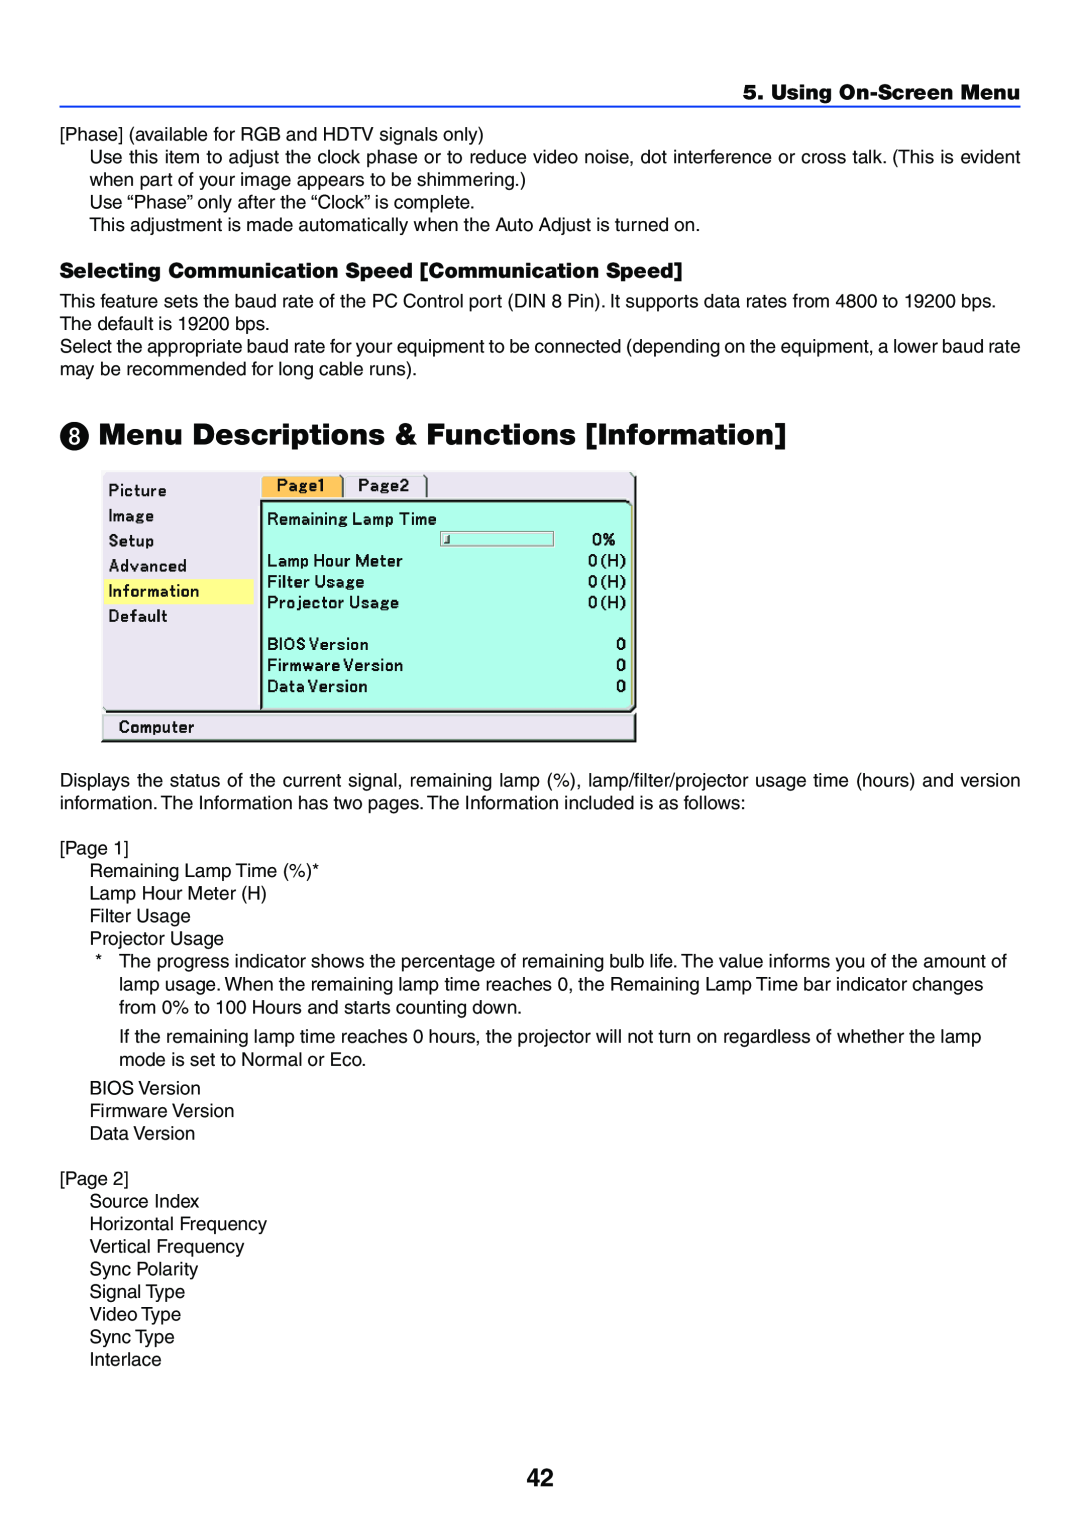 NEC VT37 manual Menu Descriptions & Functions Information, Selecting Communication Speed Communication Speed 